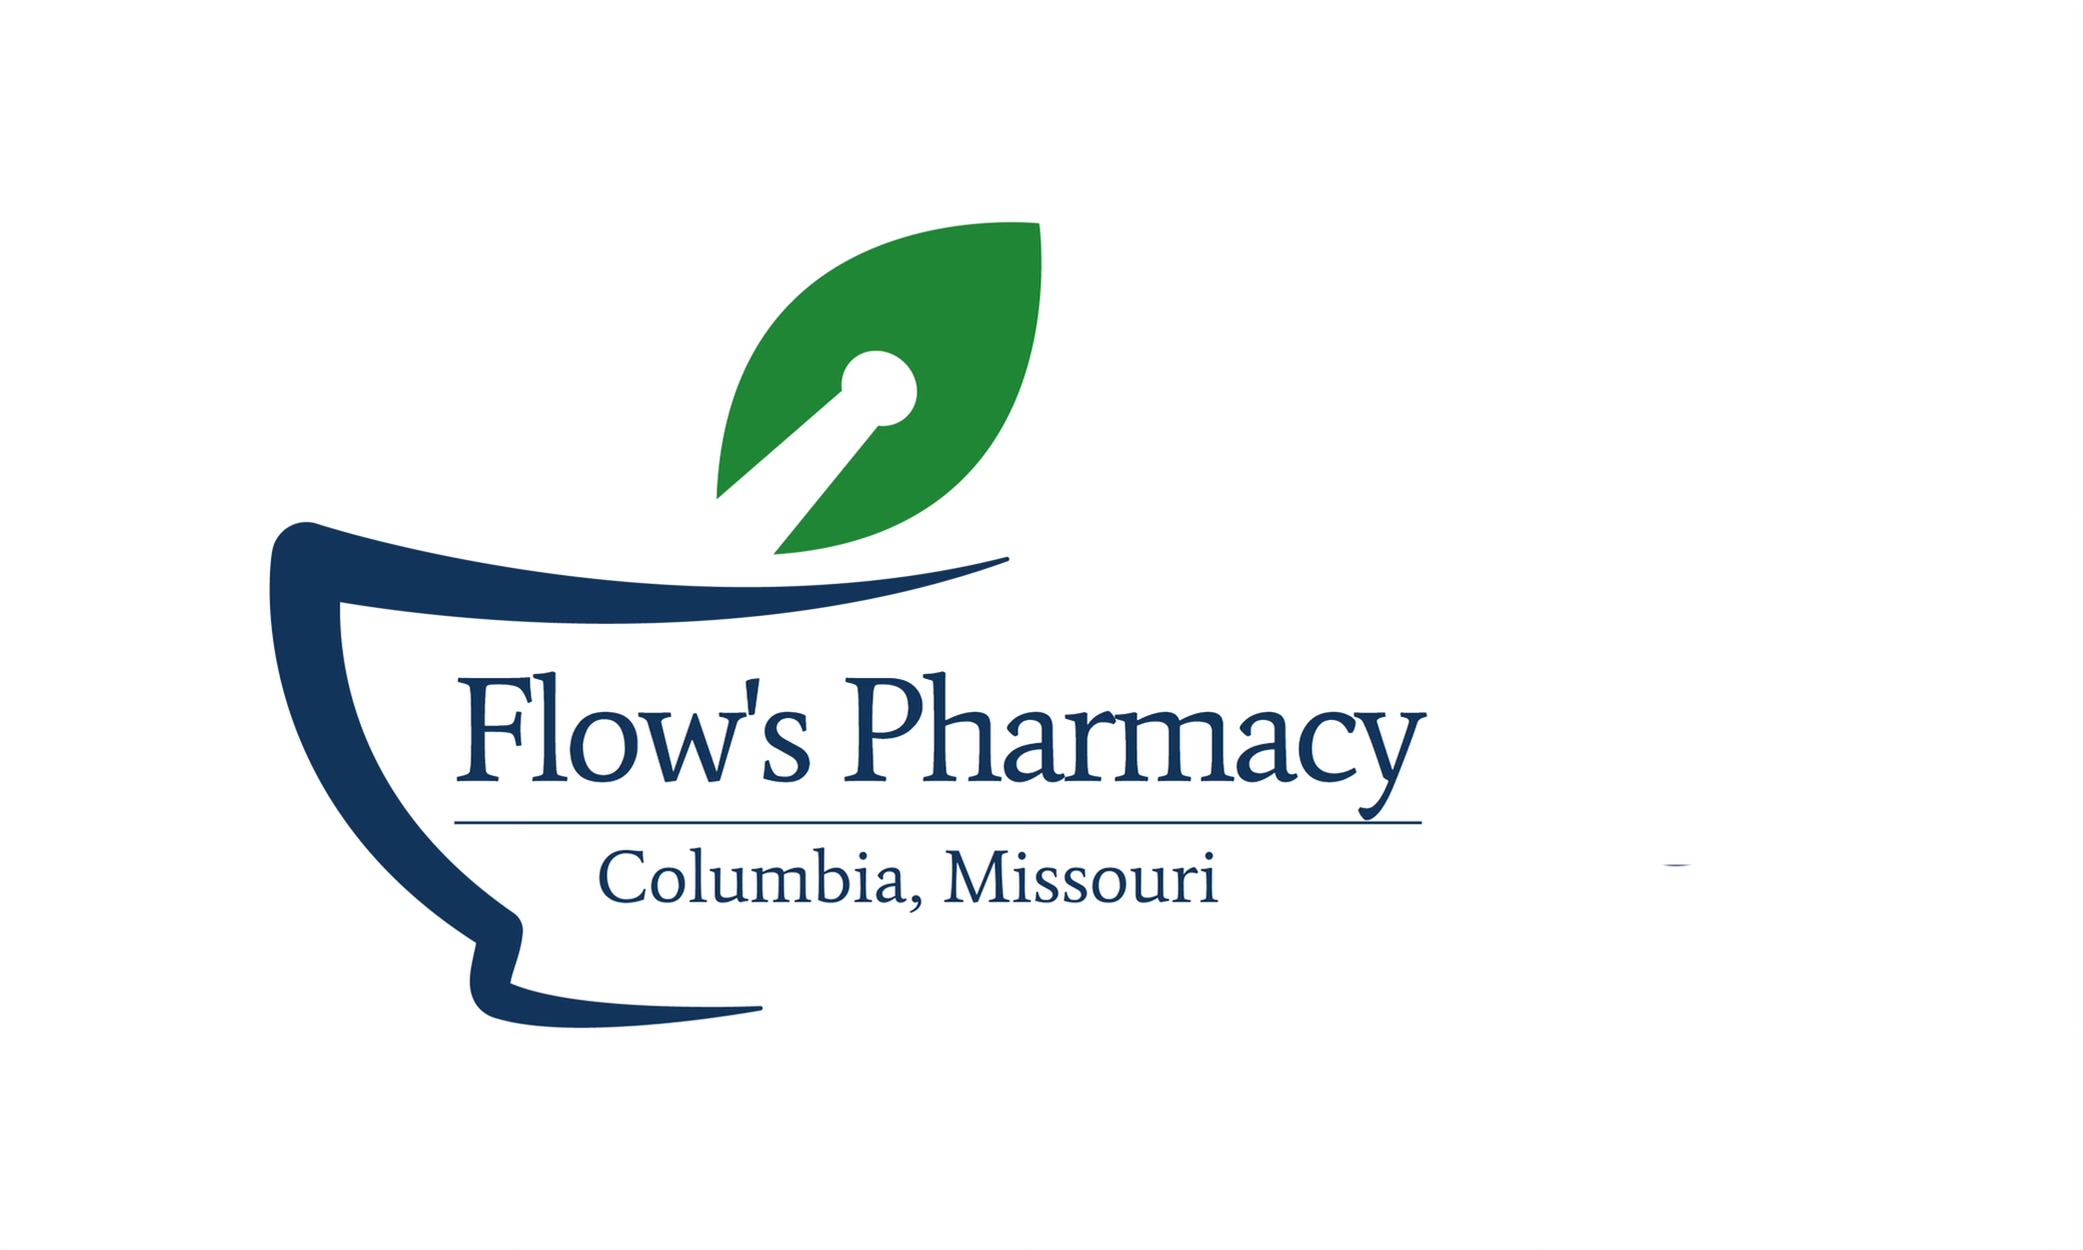 Flows Pharmacy